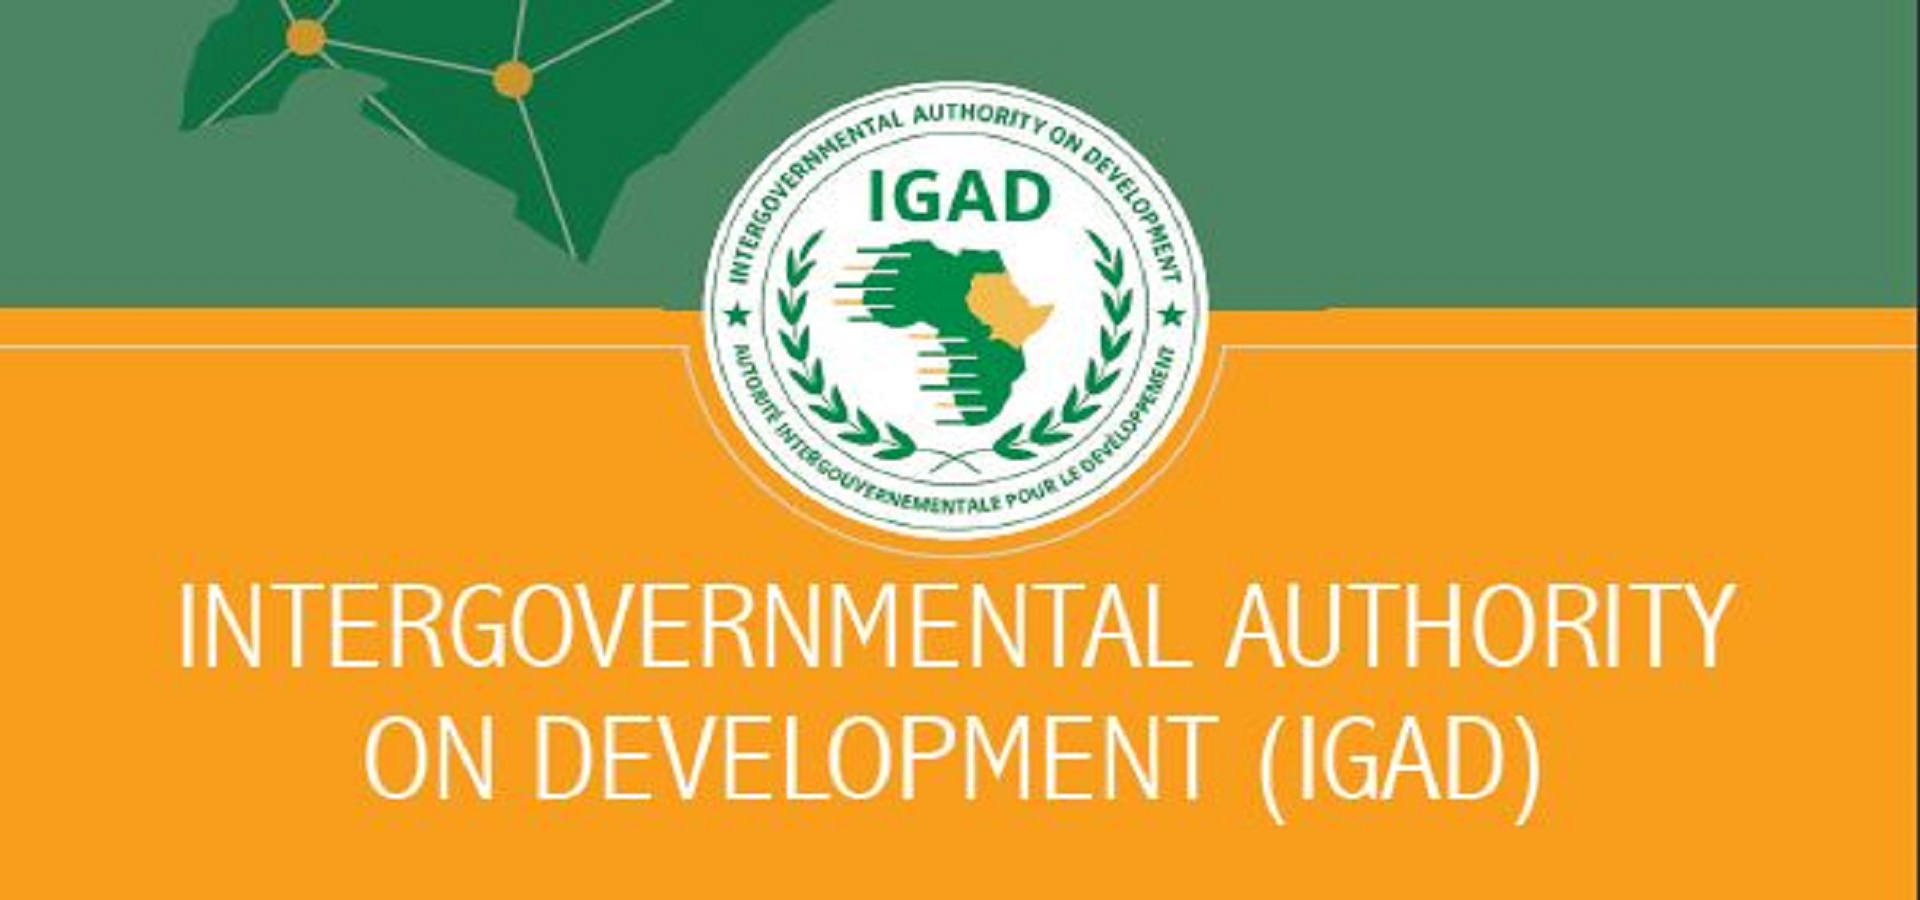 The IGAD Regional Education Policy Framework